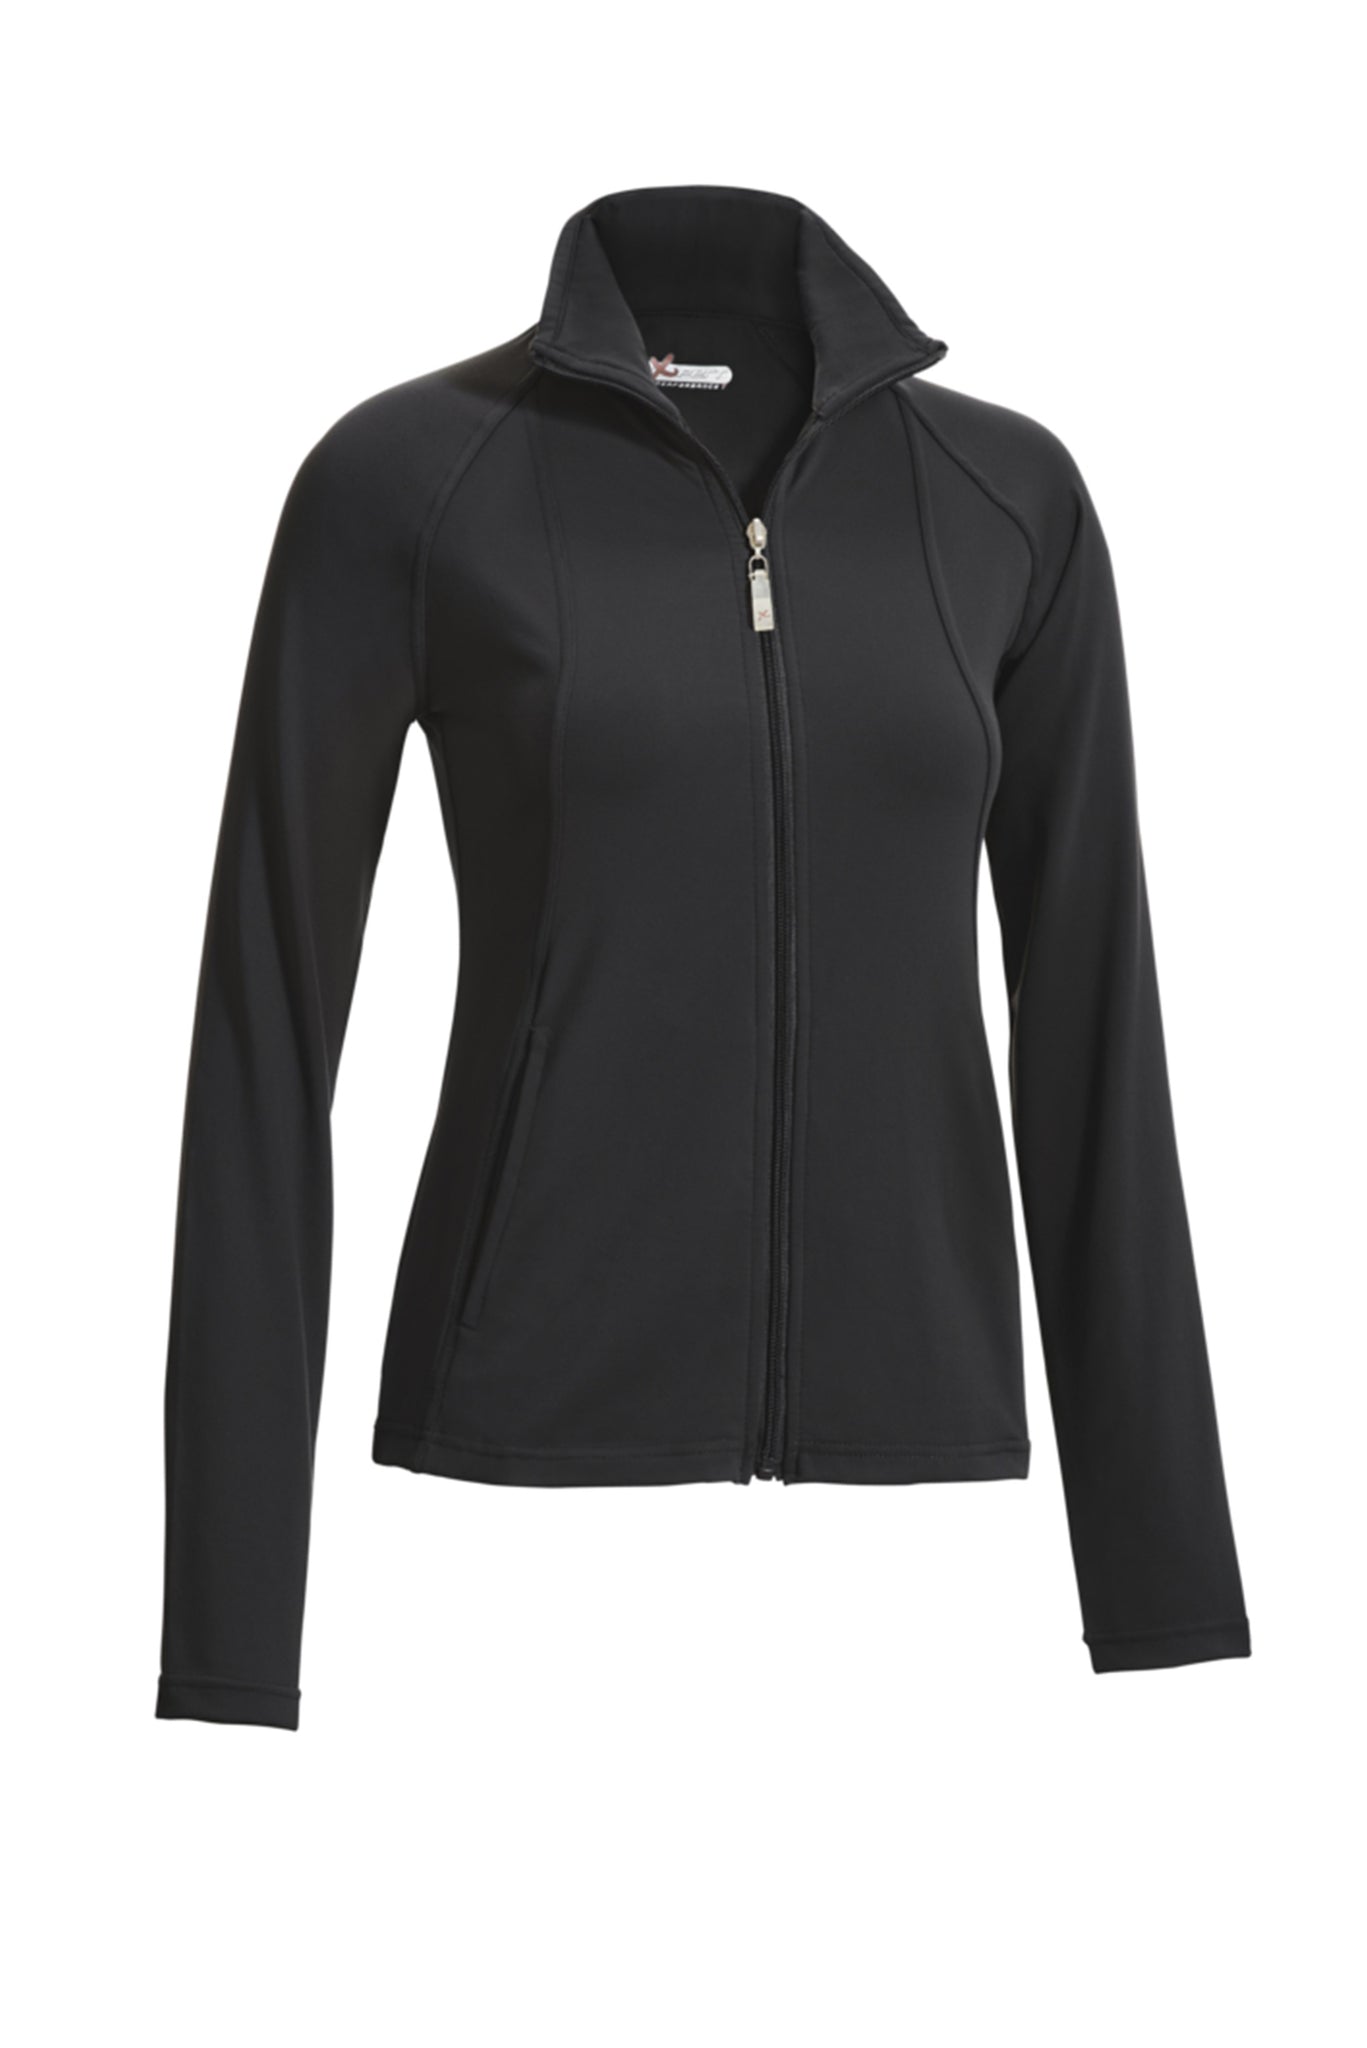 AZ303 Zip Up Fashion Sports Jacket - Expert Brand#black